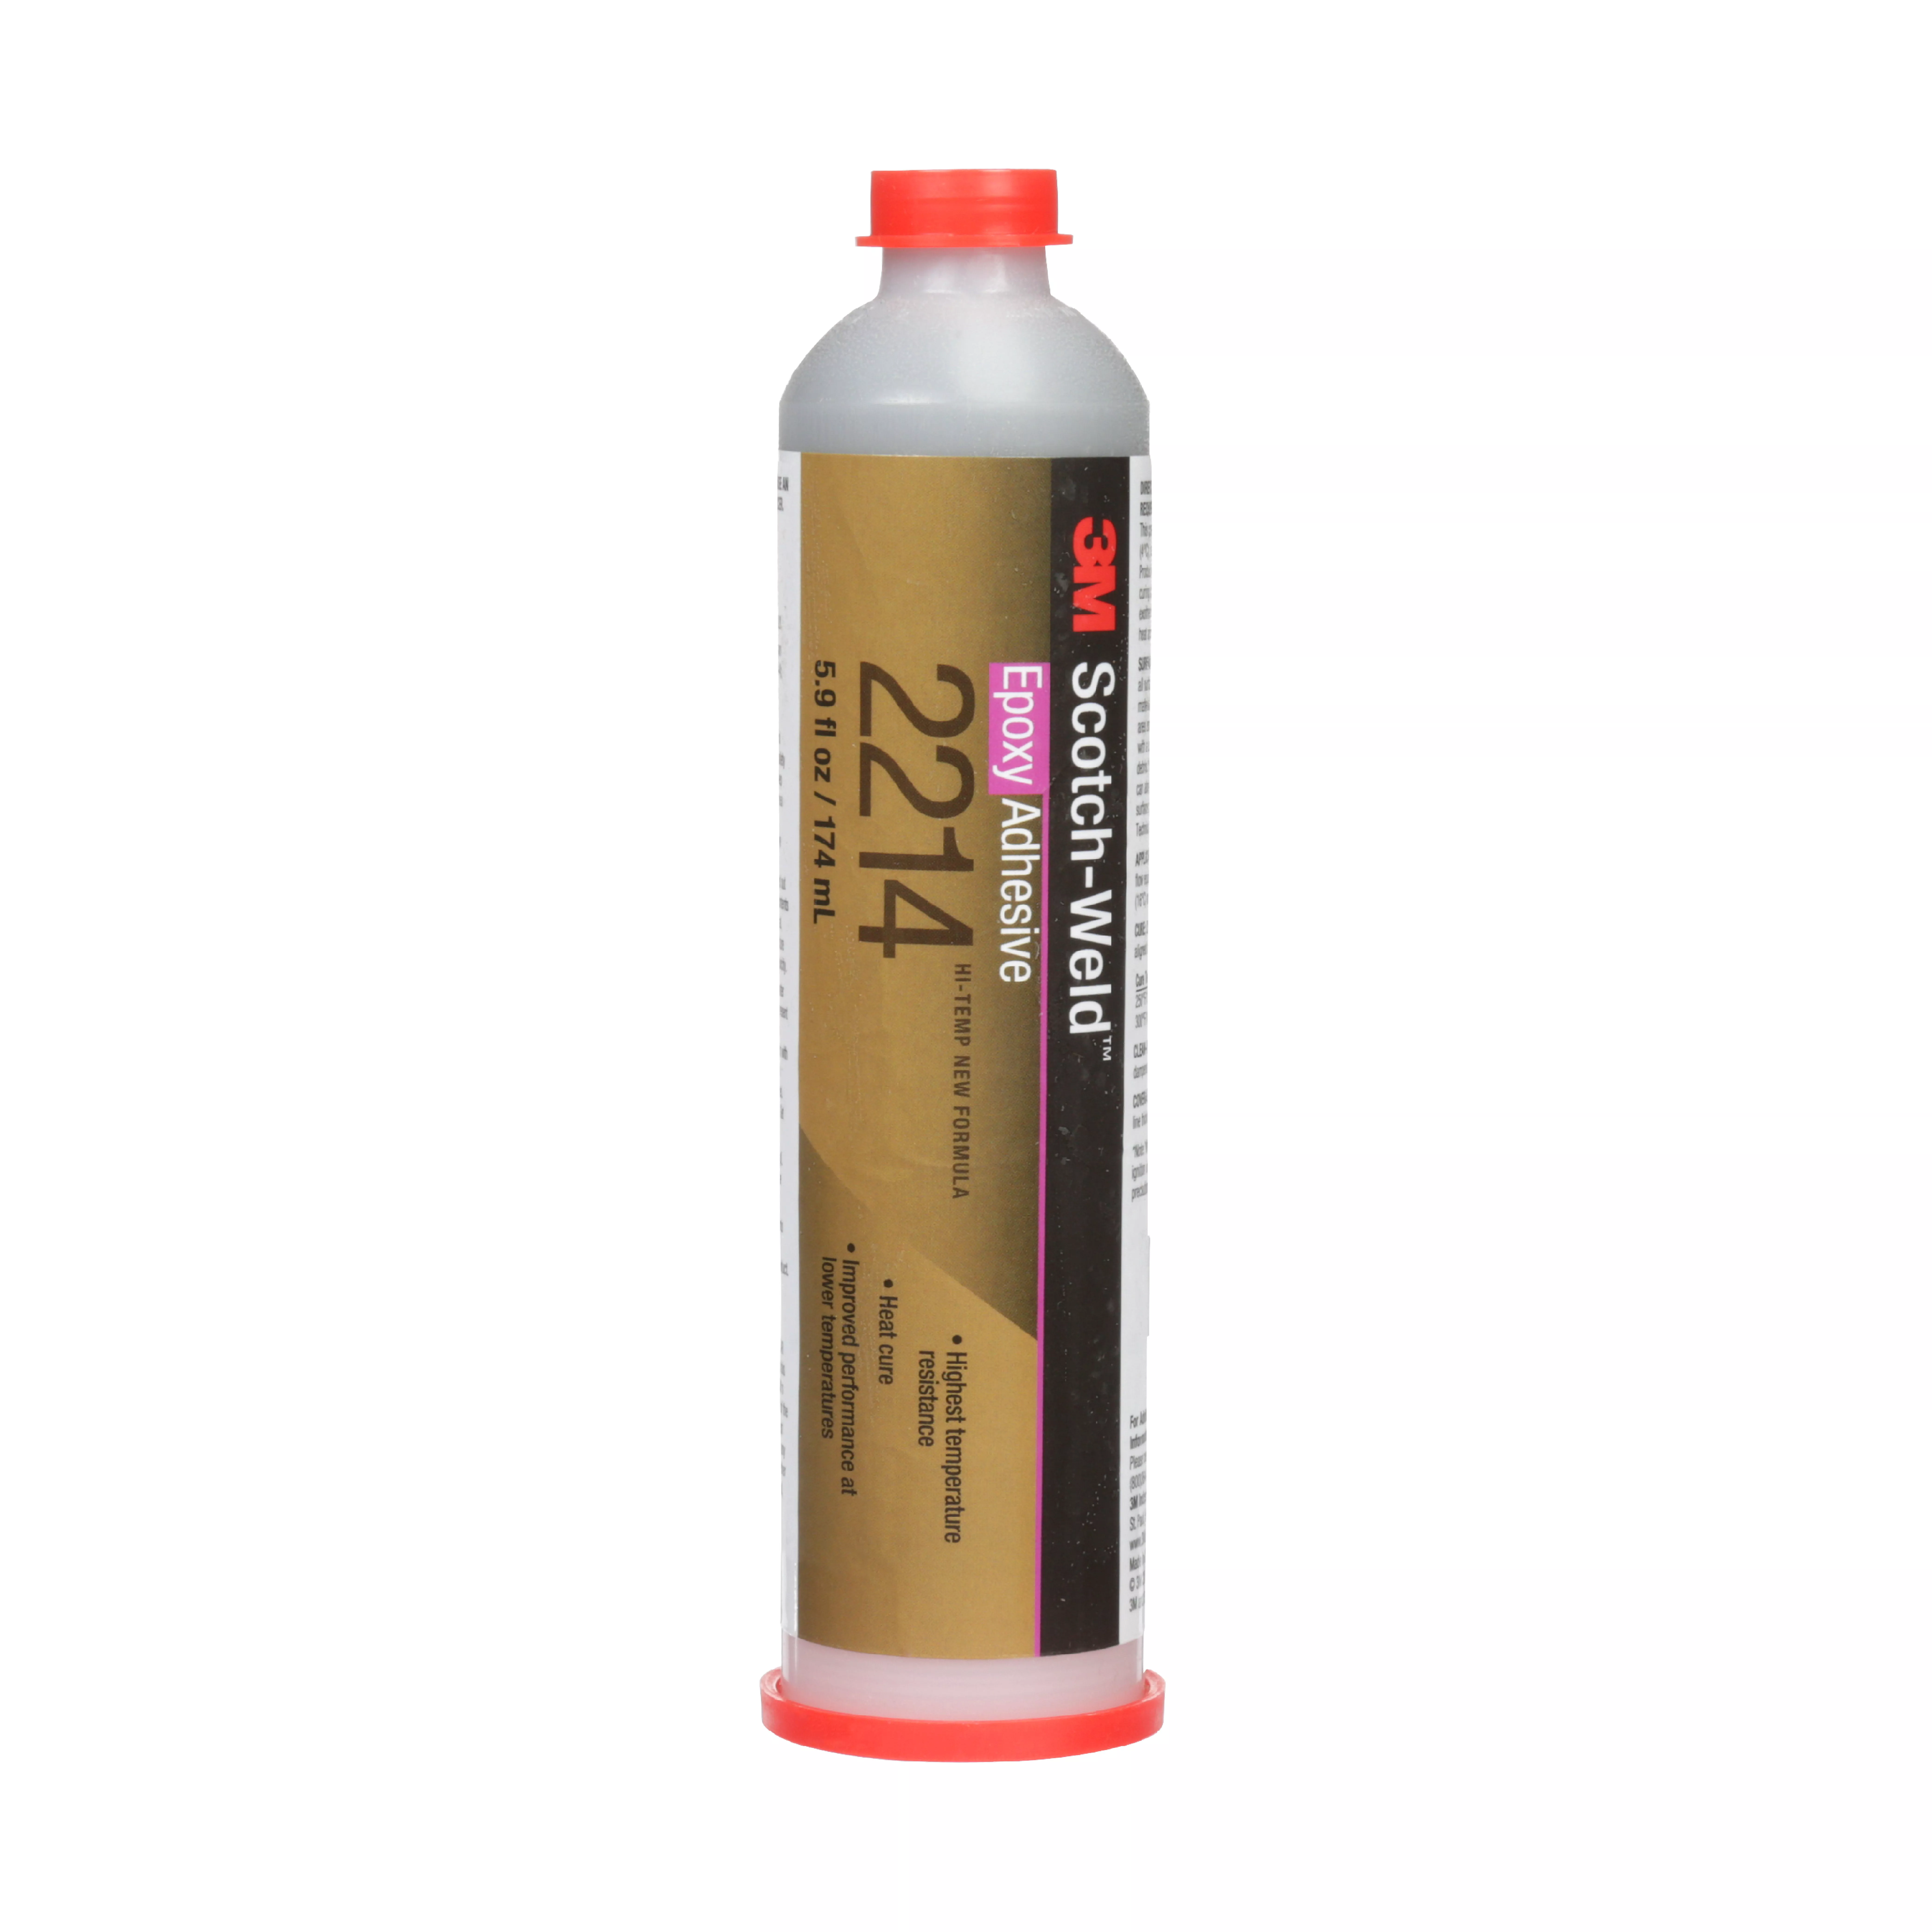 3M™ Scotch-Weld™ Epoxy Adhesive 2214, Hi-Temp New Formula, Gray, 6 fl oz
Cartridge, 6 each/Case